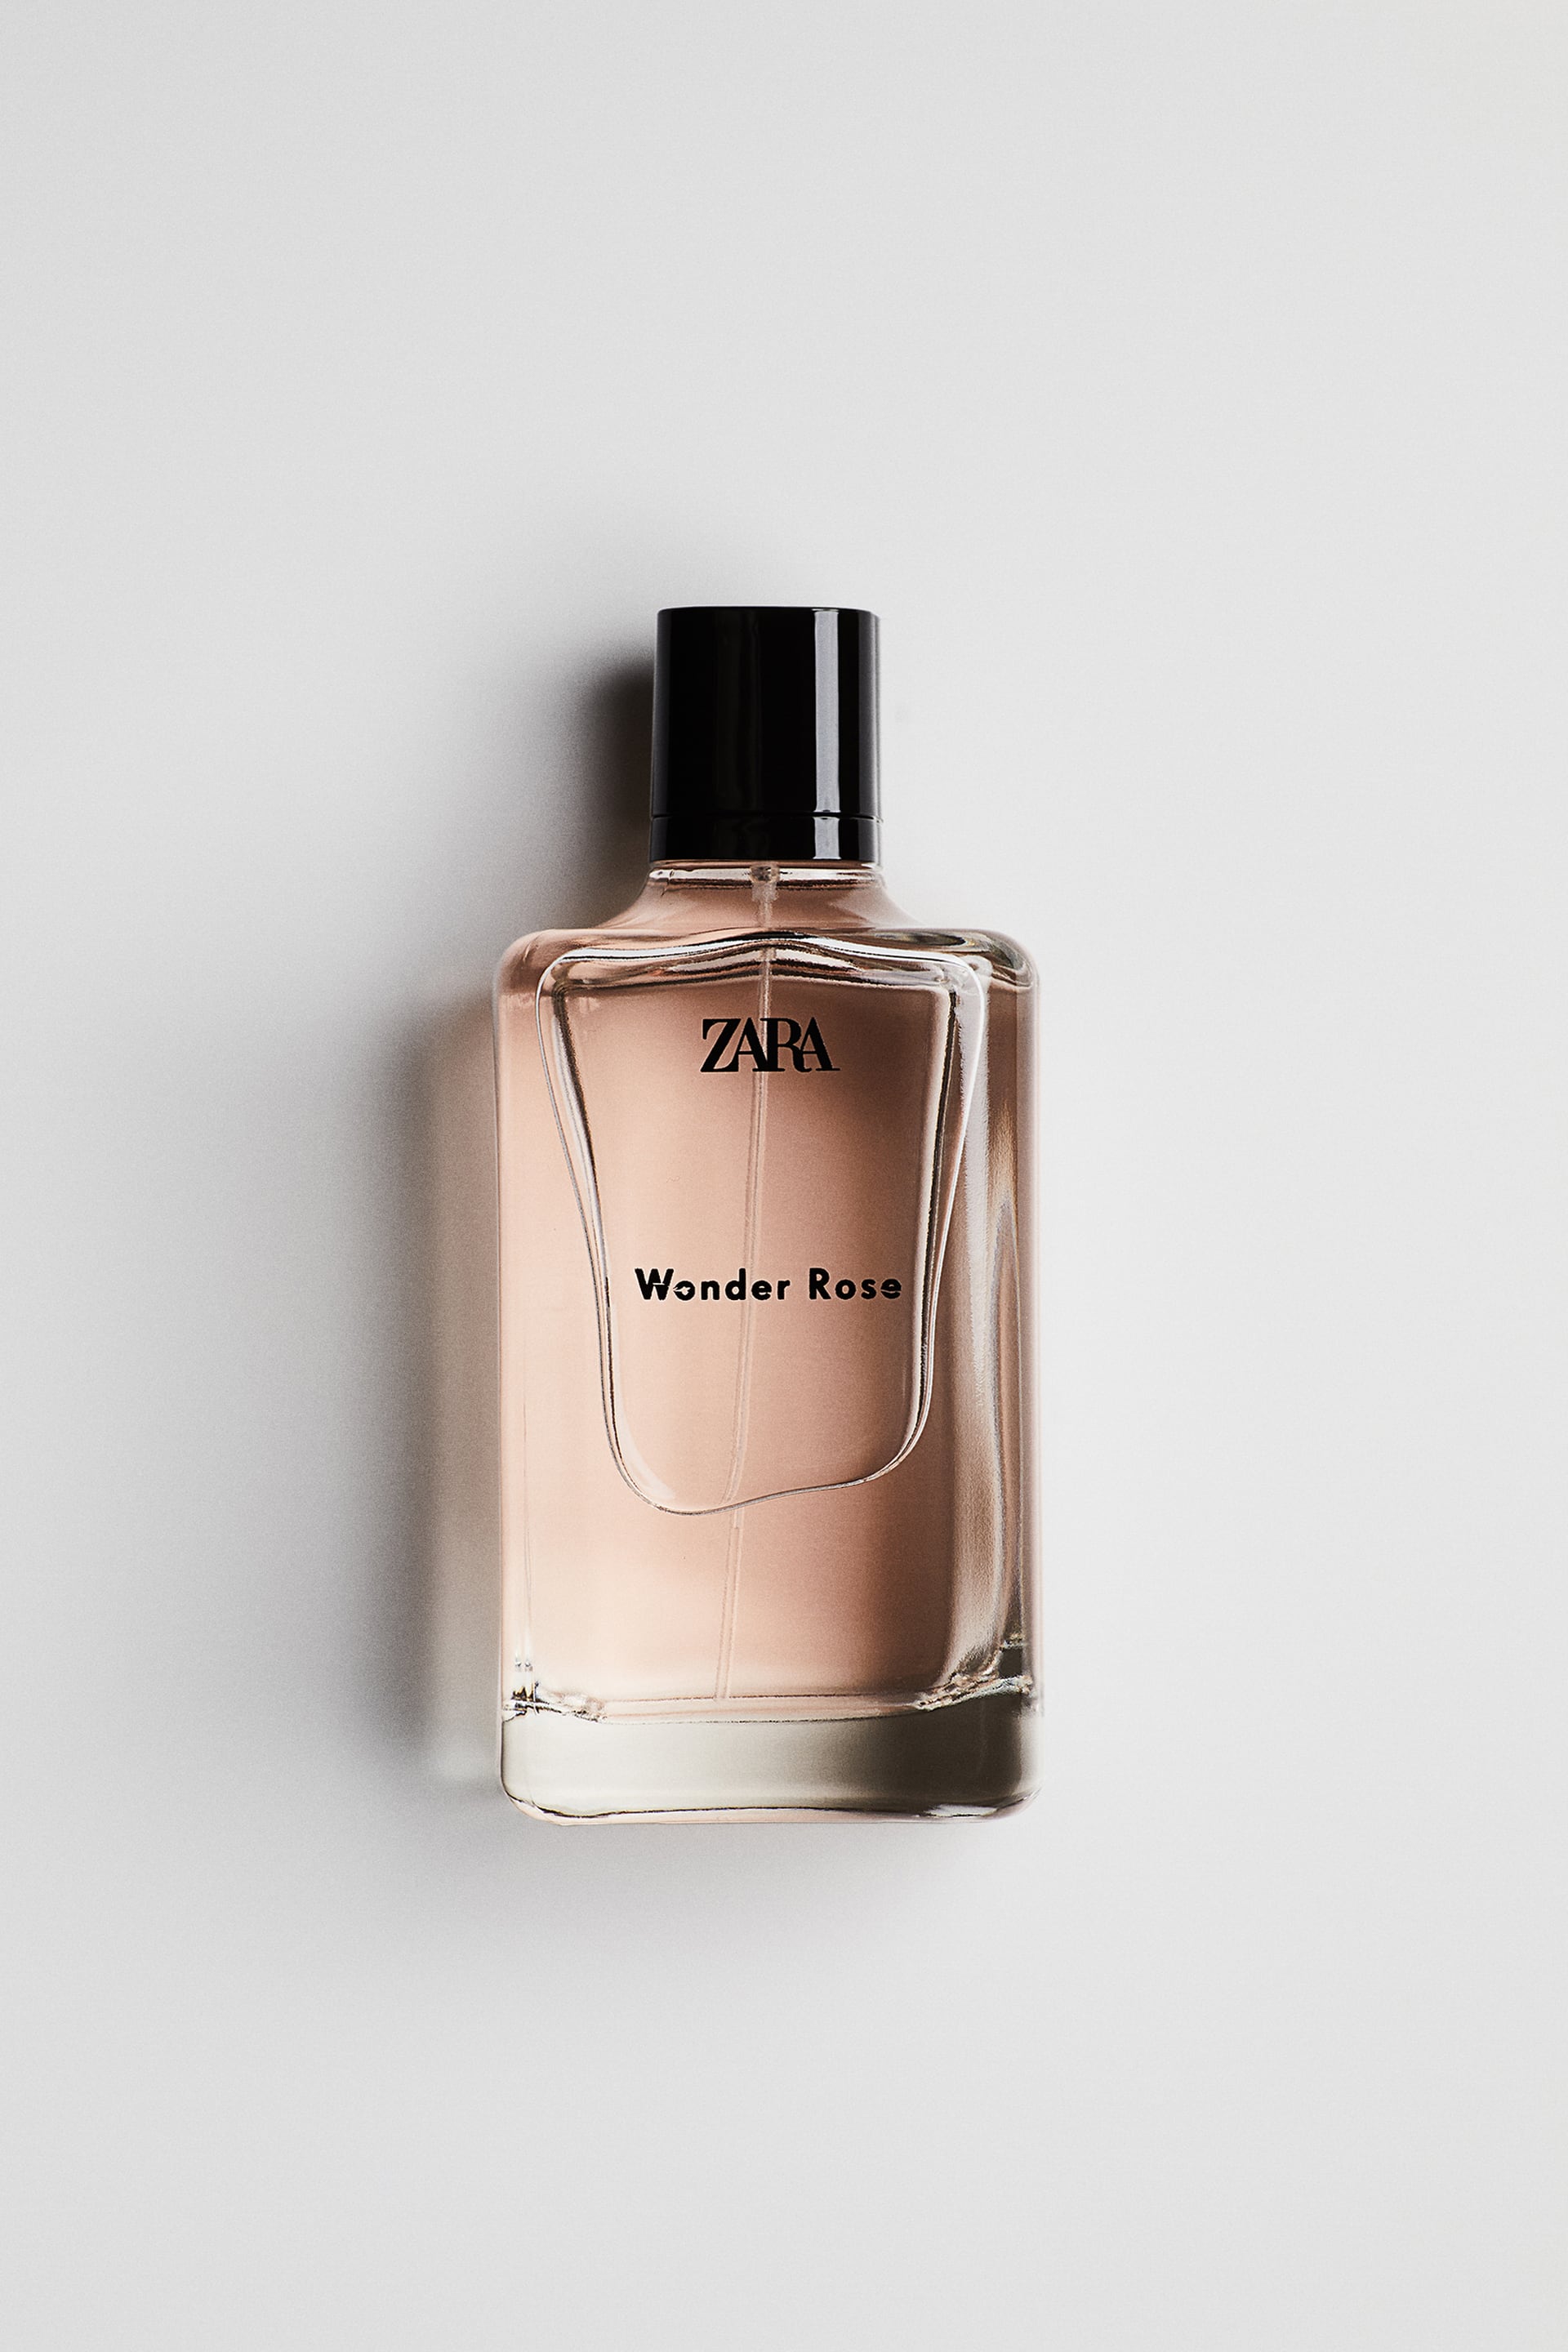 7 Zara Perfumes For Men To Buy Online